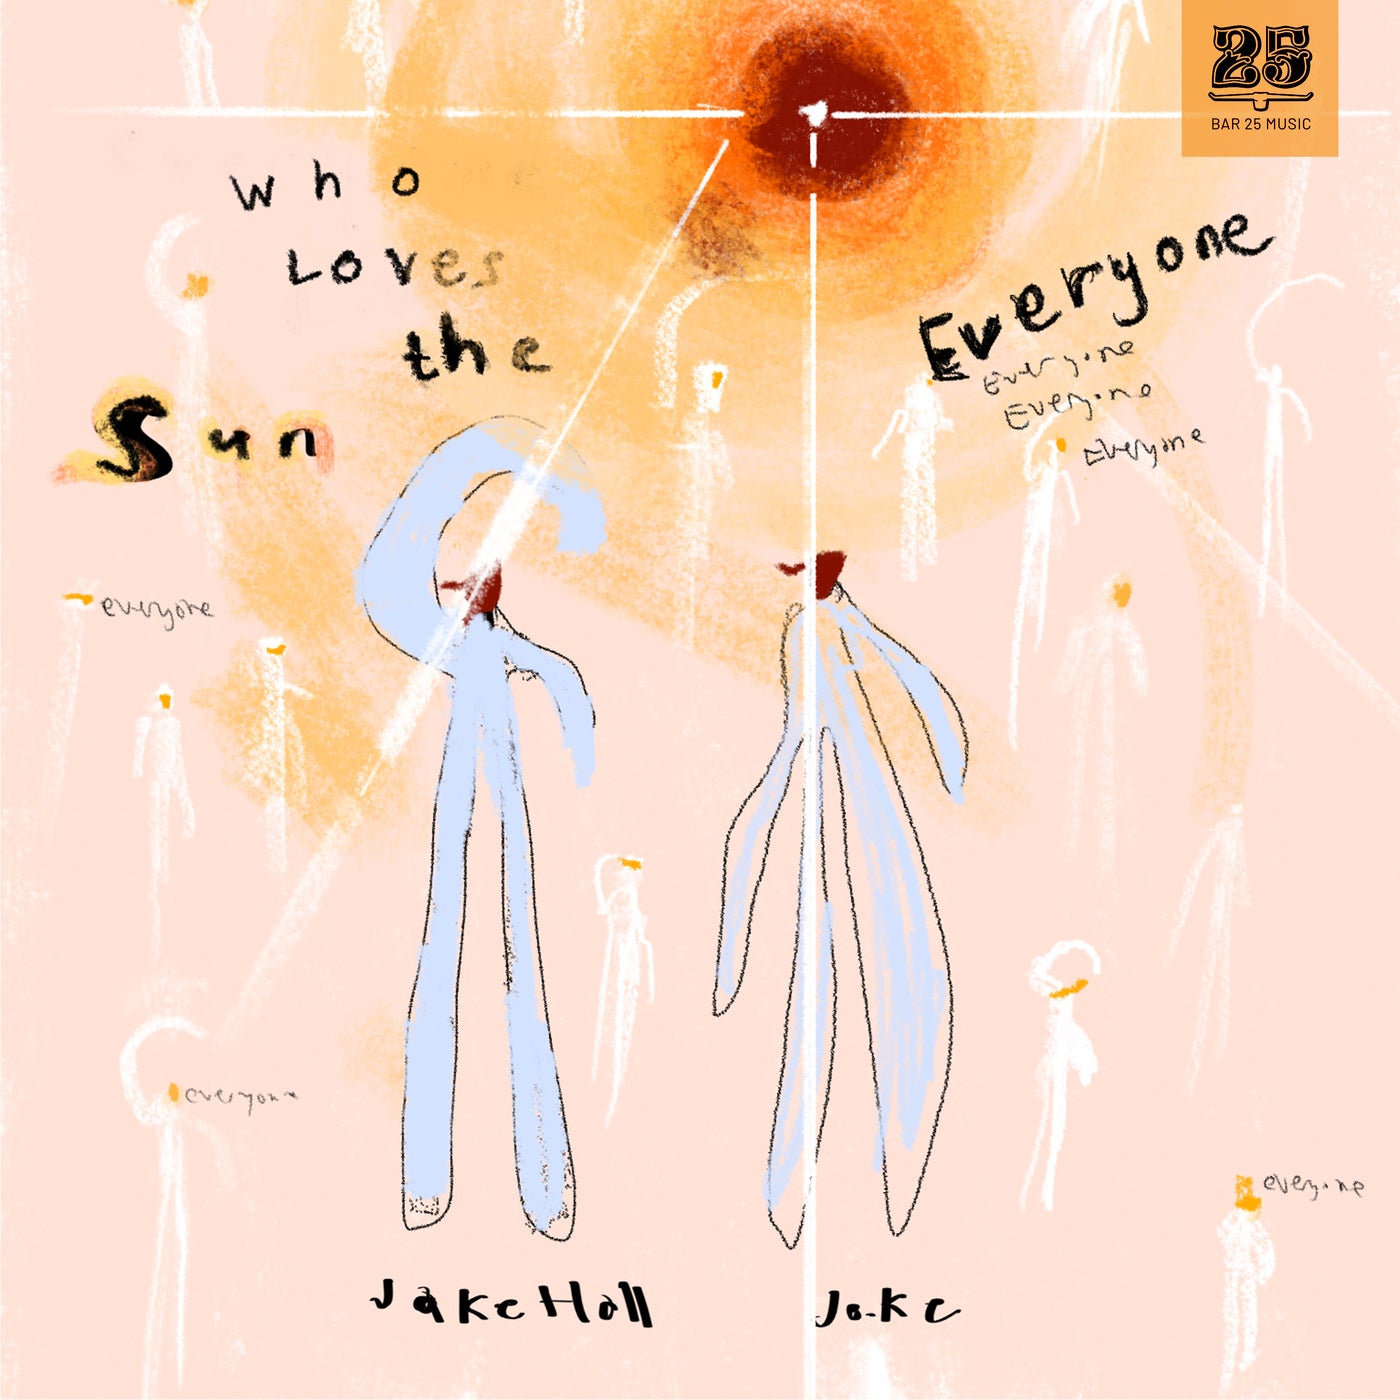 image cover: Jo.Ke, Jake Hall - Who Loves The Sun (Everyone's Mix) on Bar 25 Music